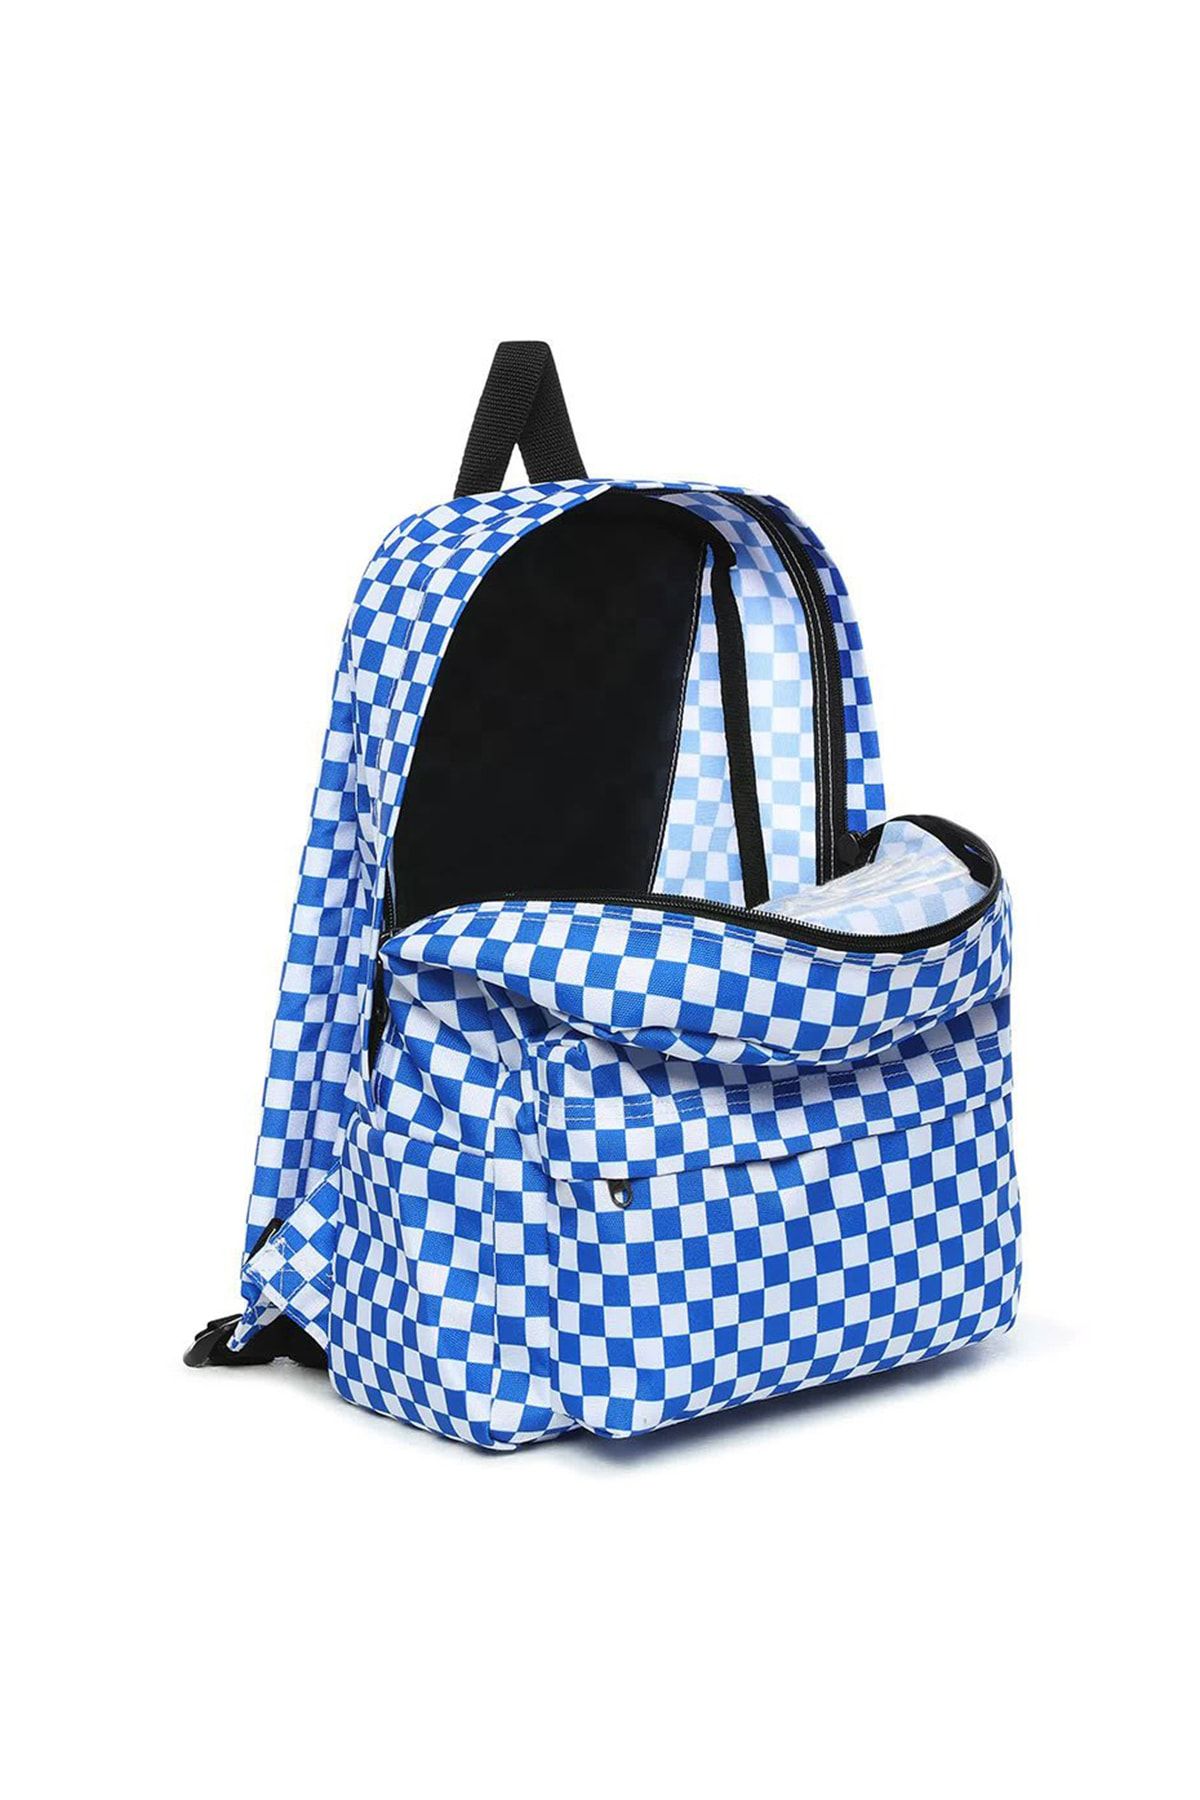 Vans New Skool Backpack Blue - Sports Vn0002tljbs1 Boys Trendyol Backpack Unisex